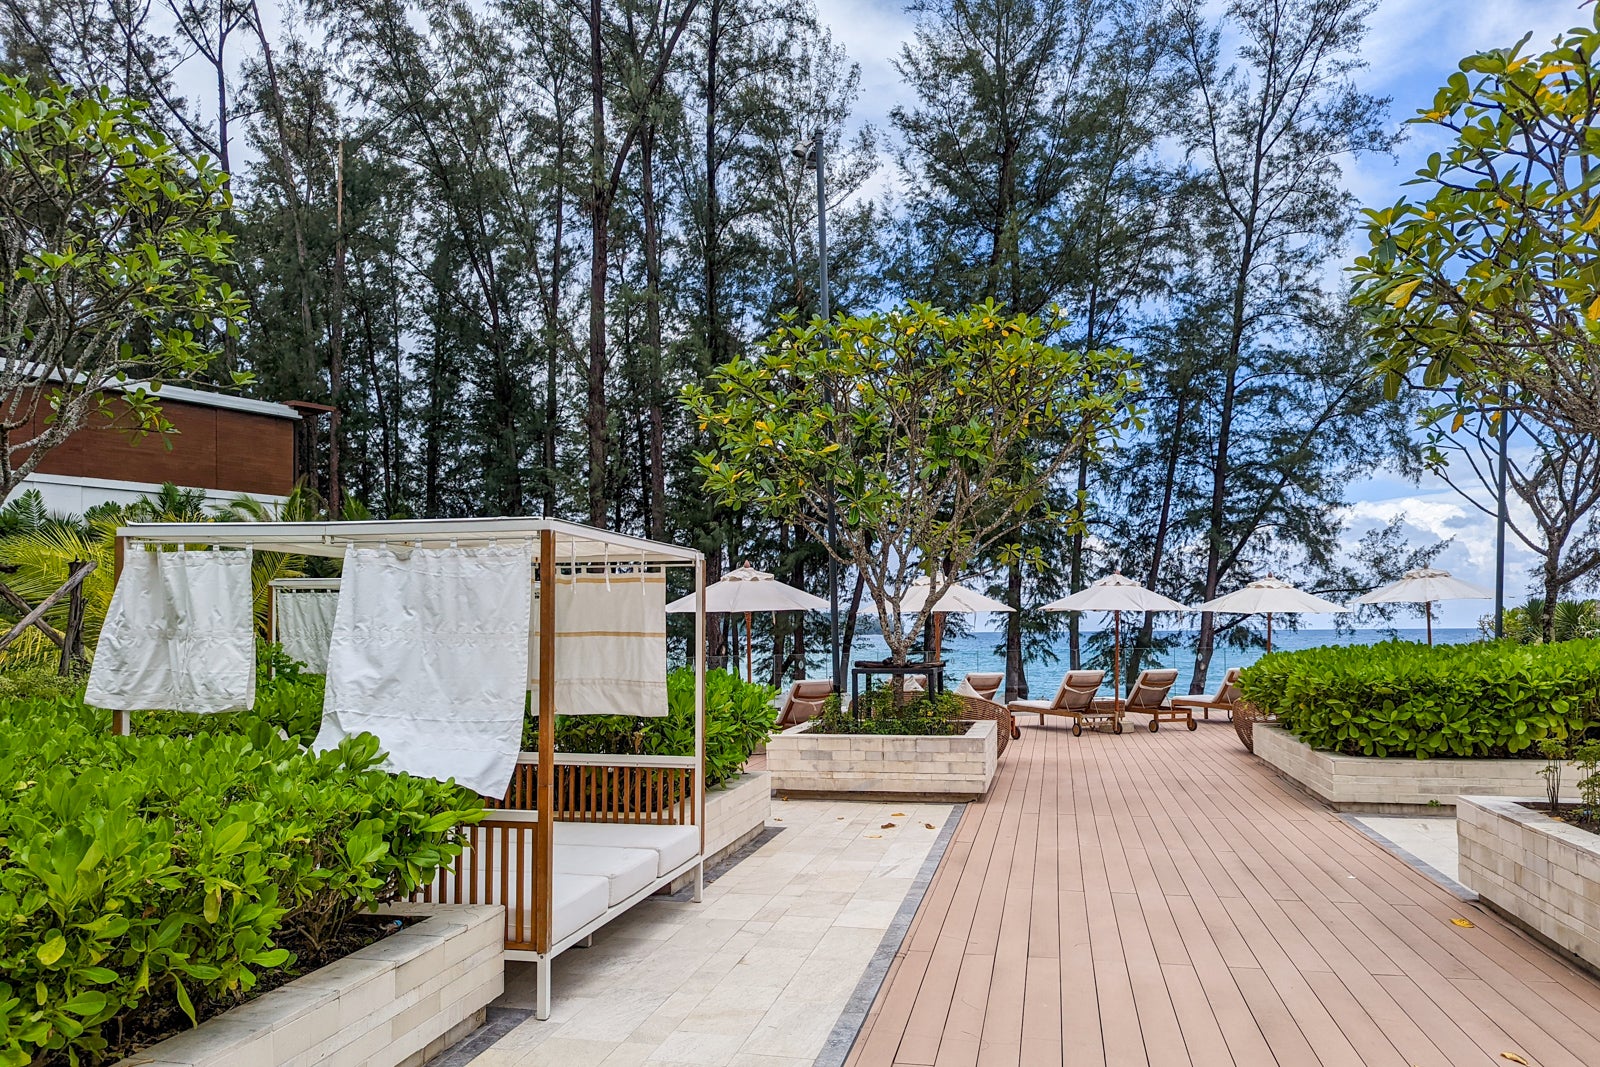 InterContinental Phuket Resort Club